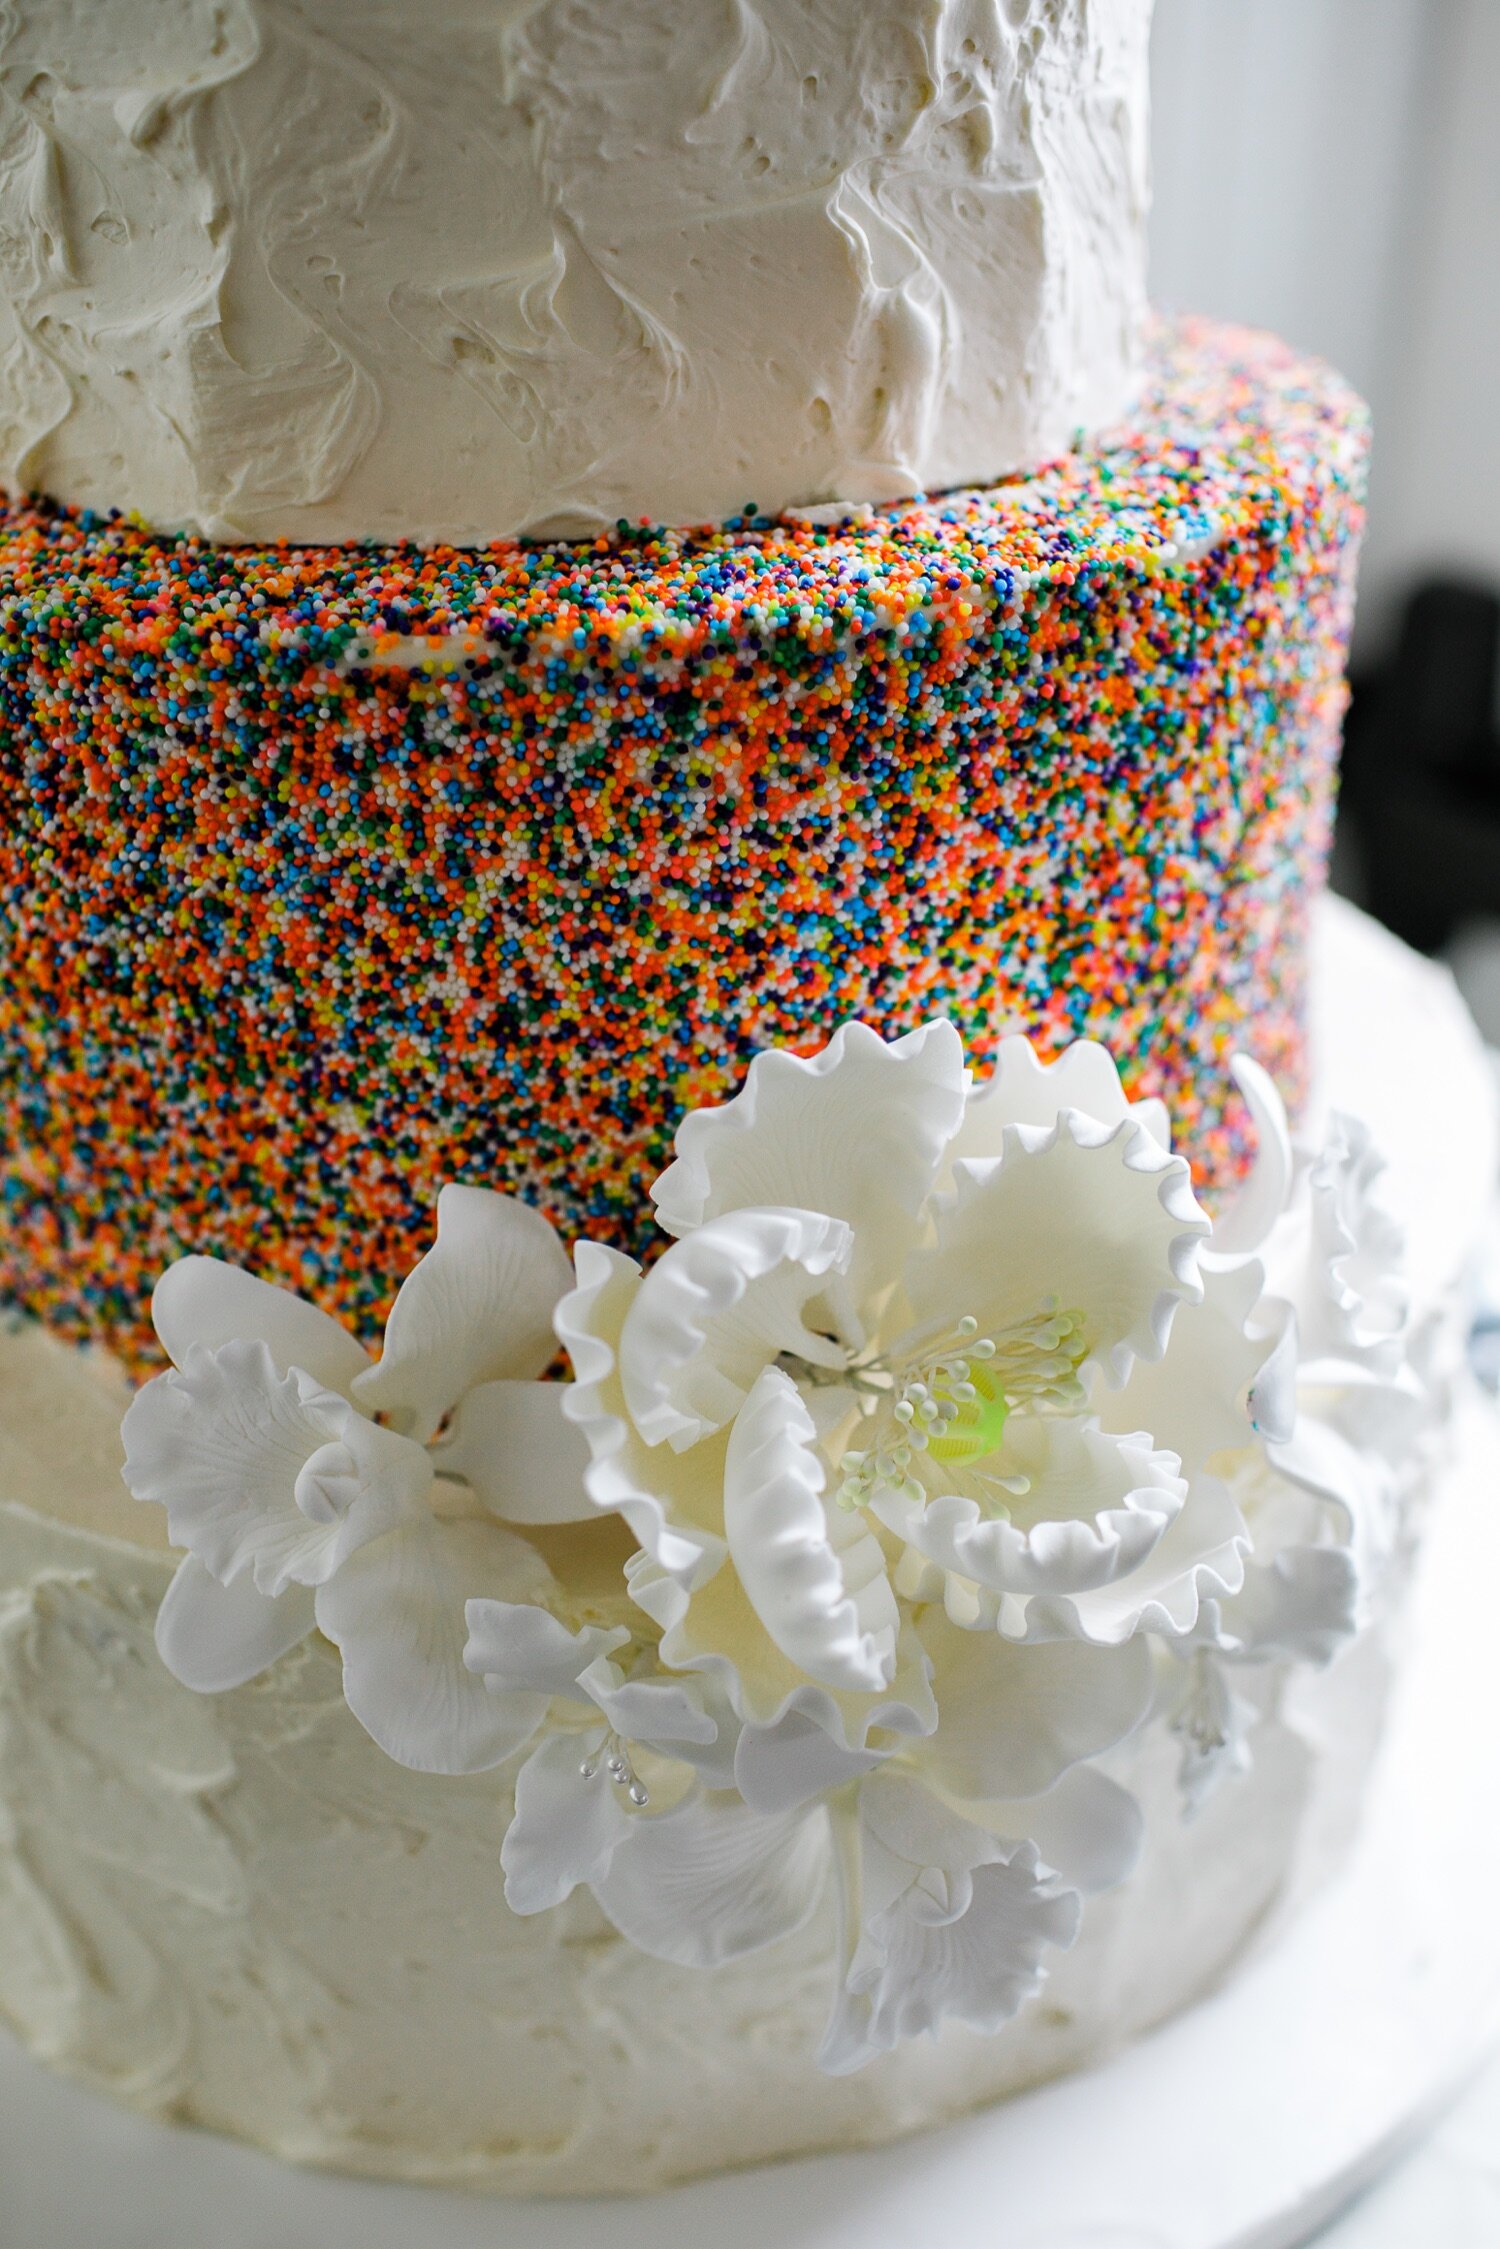 57_Confetti cake at Whitby Castle wedding in Rye, NY.jpg